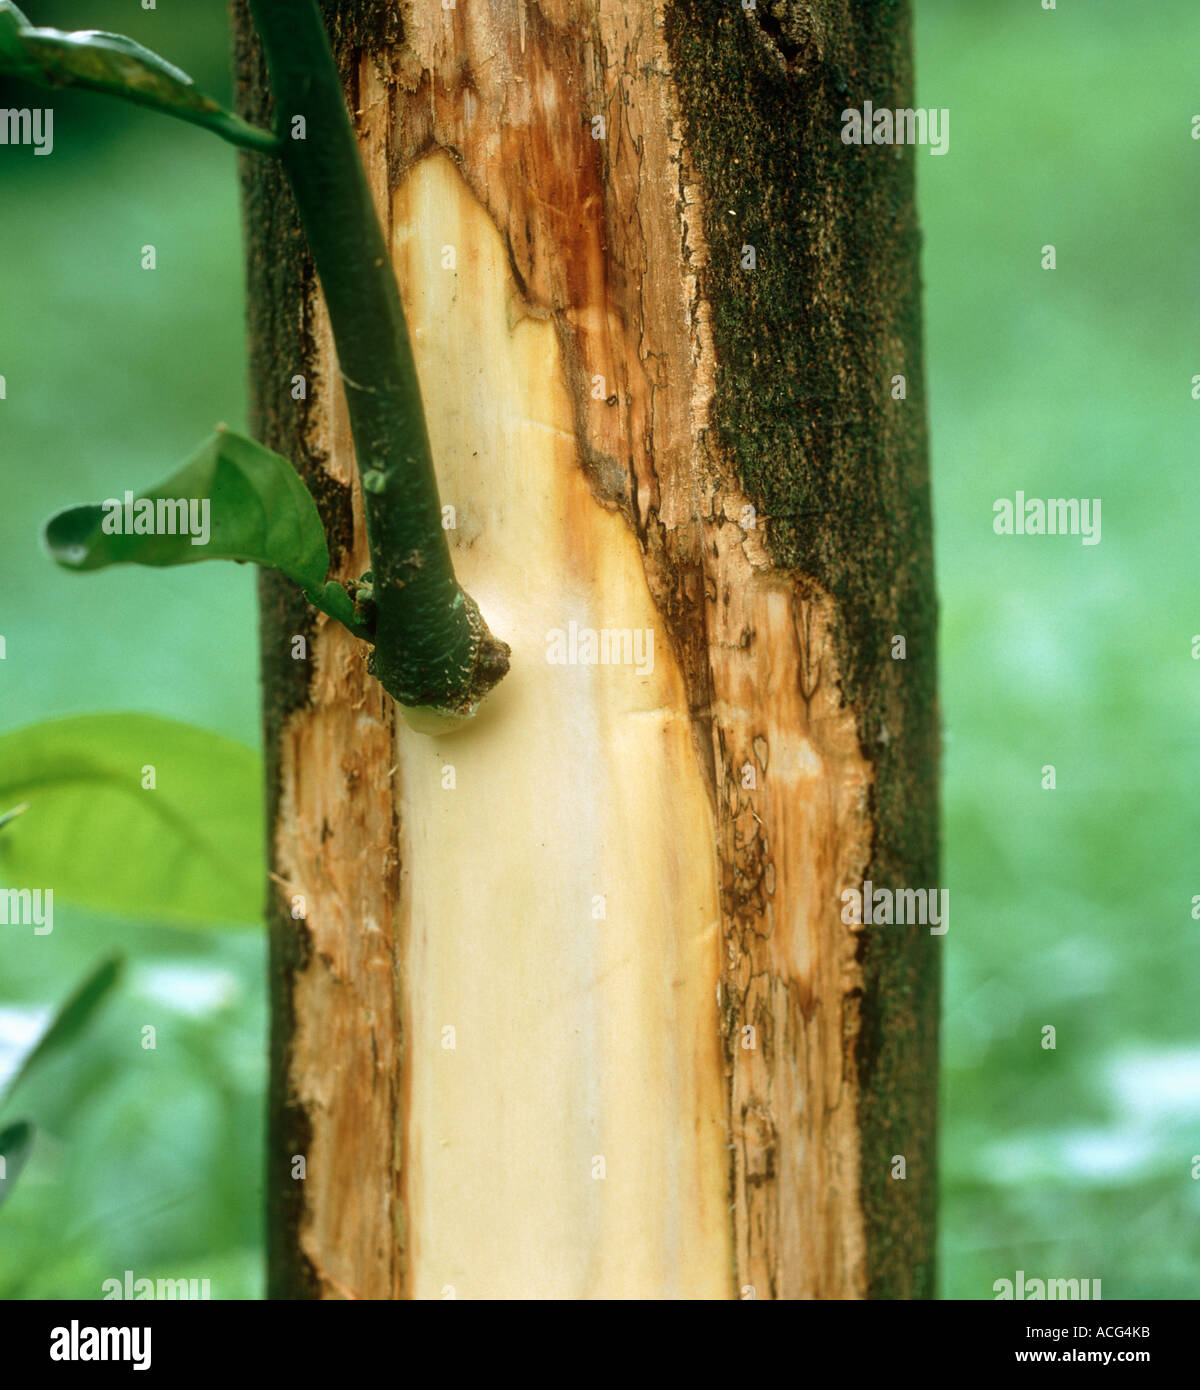 Mal secco Phoma tracheiphila exposed diseased vascular tissue on lemon trunk Stock Photo